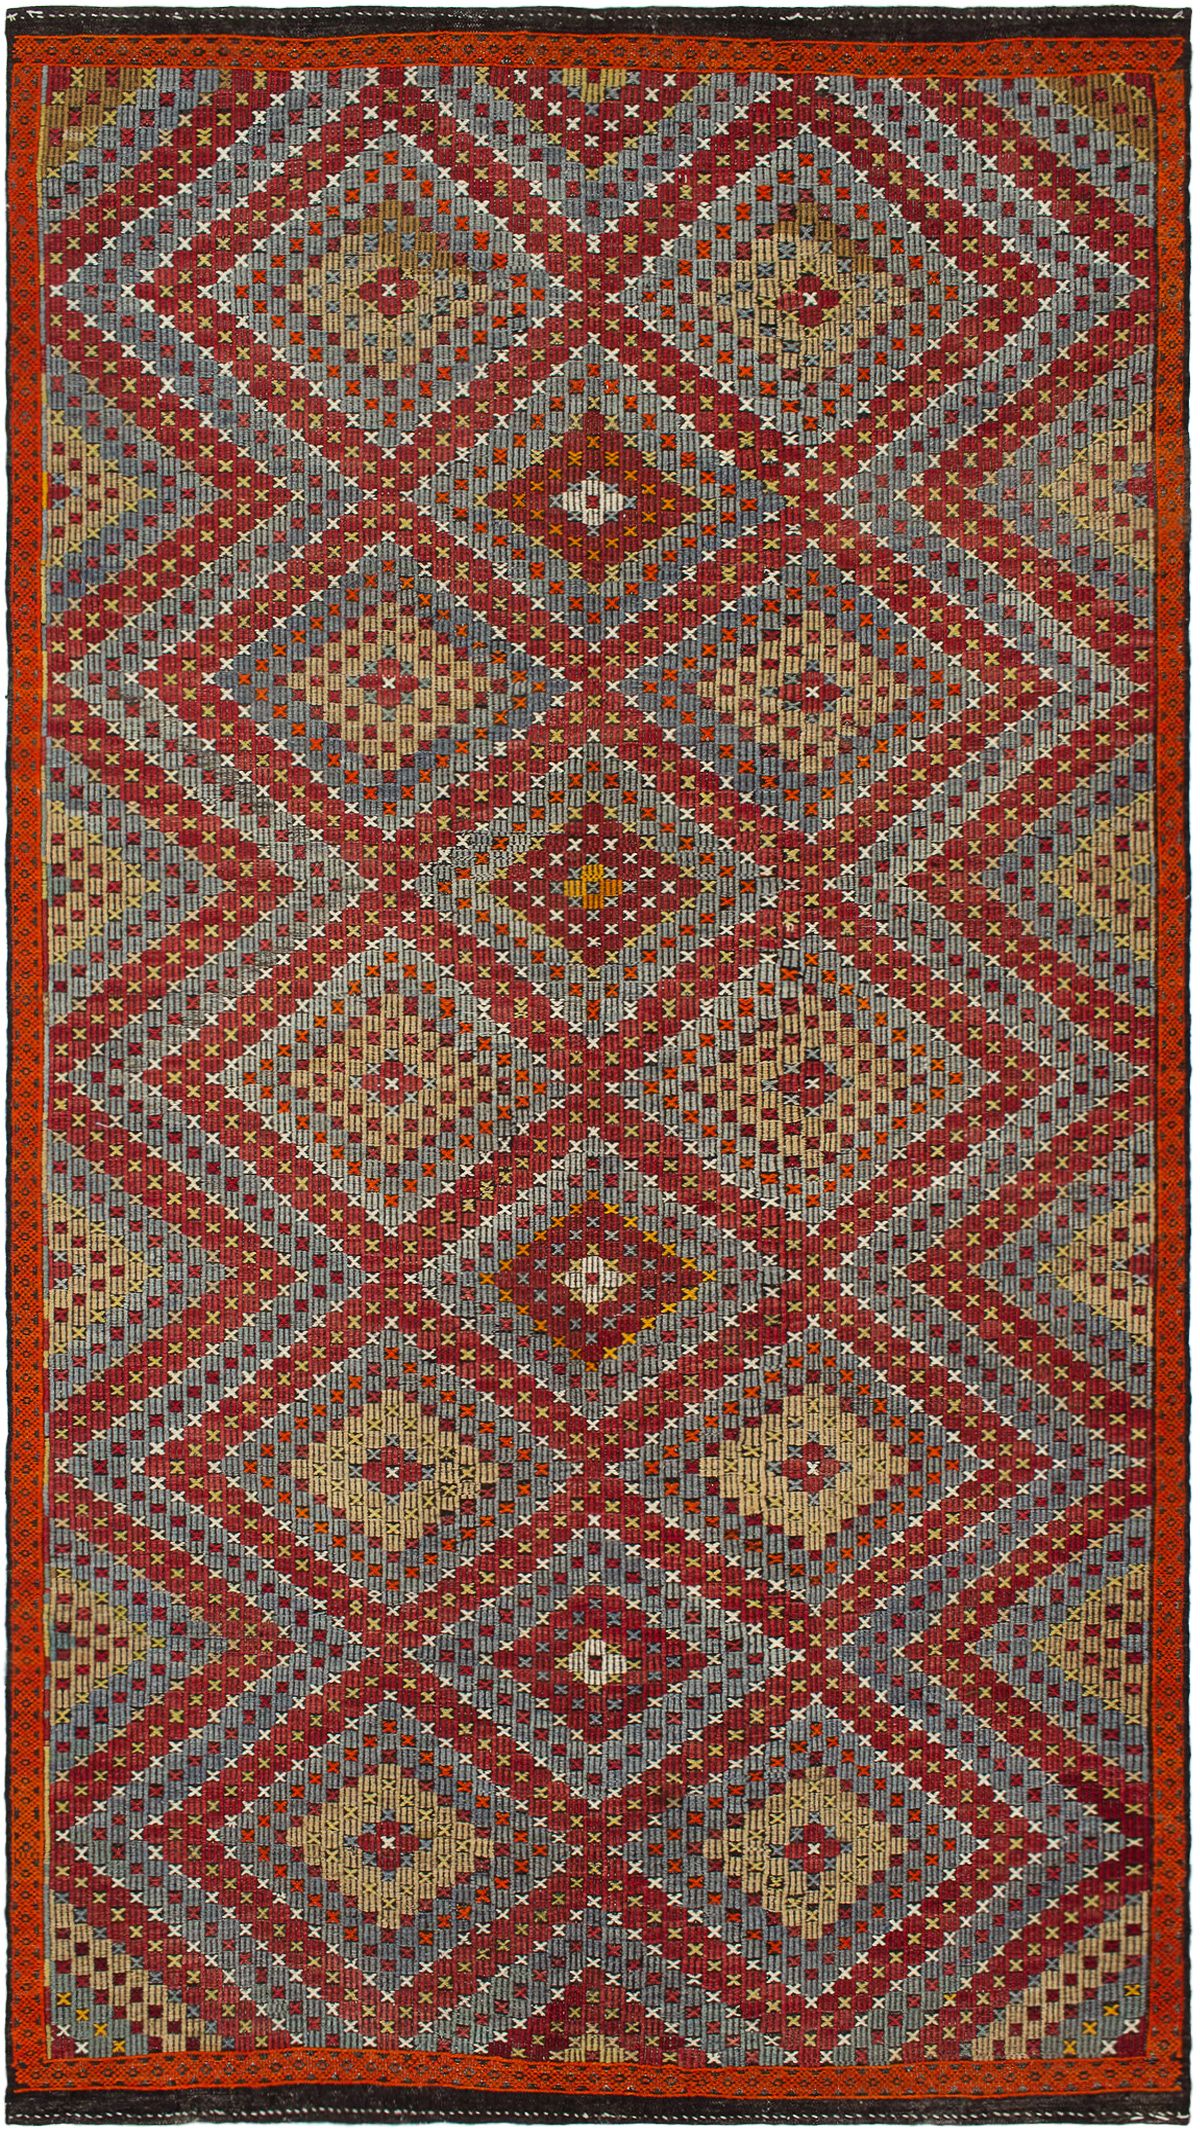 Hand woven Yoruk Dark Red Wool Tapestry Kilim 5'11" x 10'10"   Size: 5'11" x 10'10"  